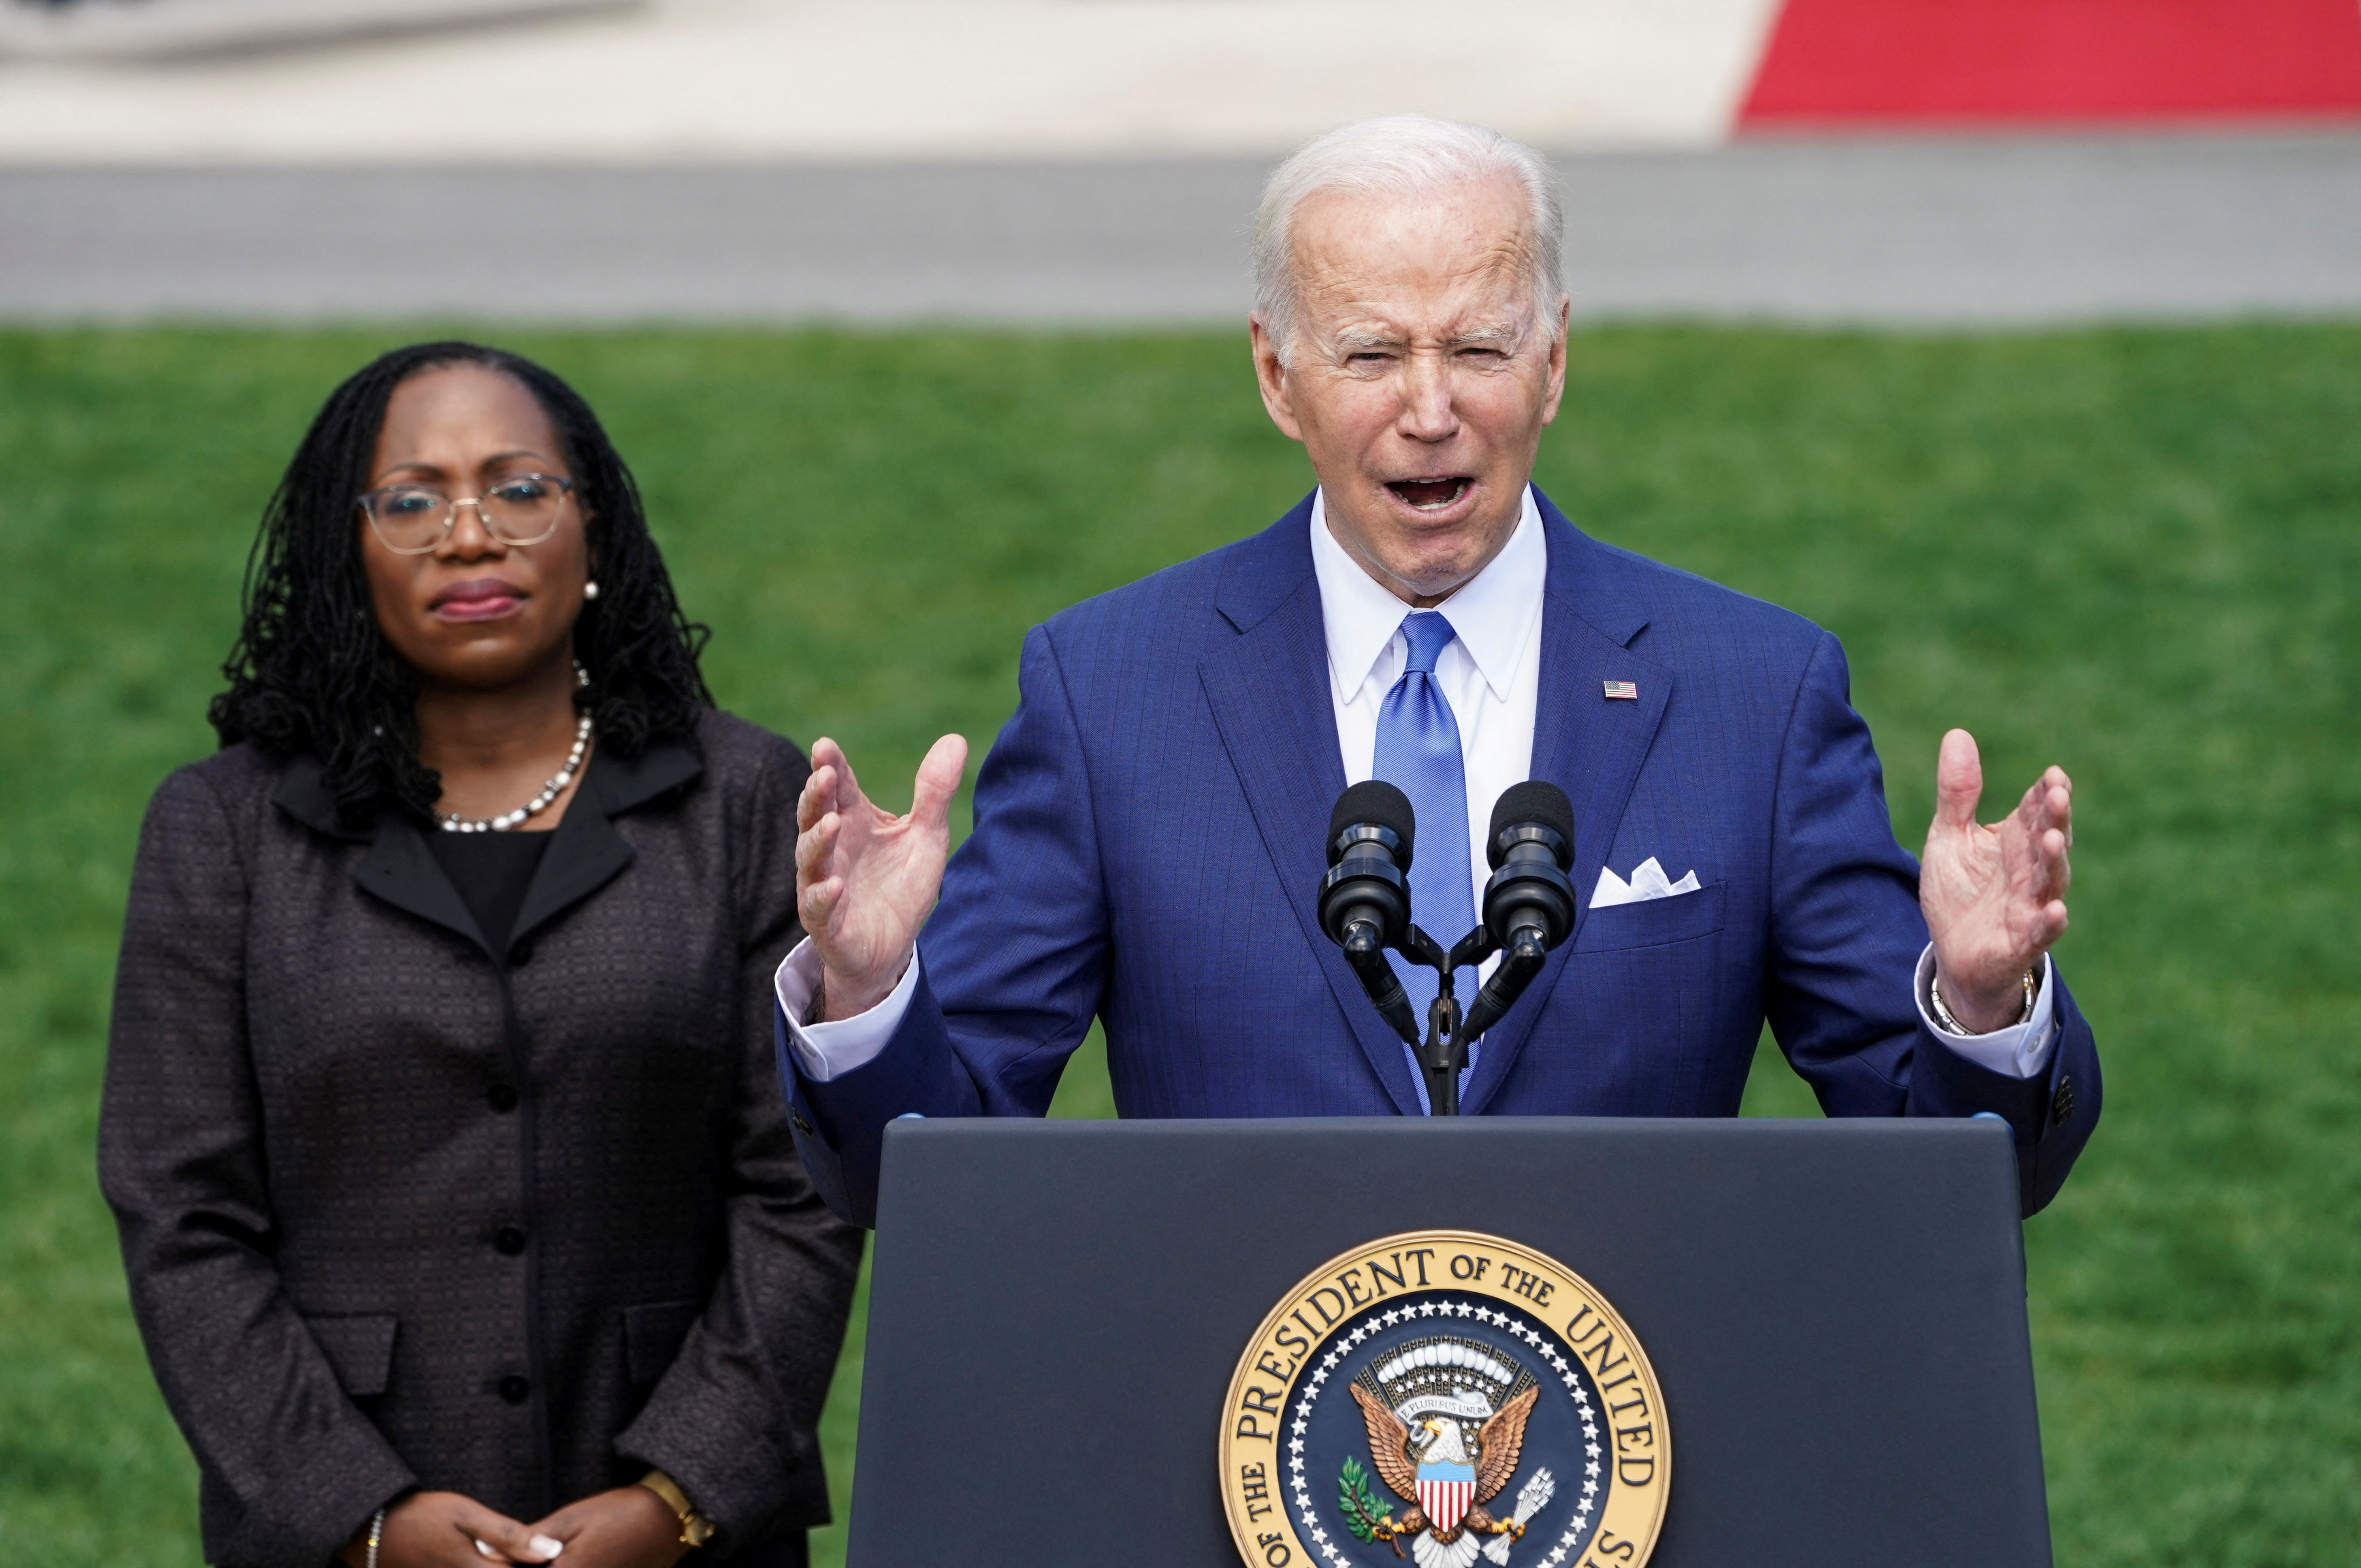 U.S. President Joe Biden hosts White House celebration of Judge Ketanji Brown Jackson's confirmation to the U.S. Supreme Court in Washington